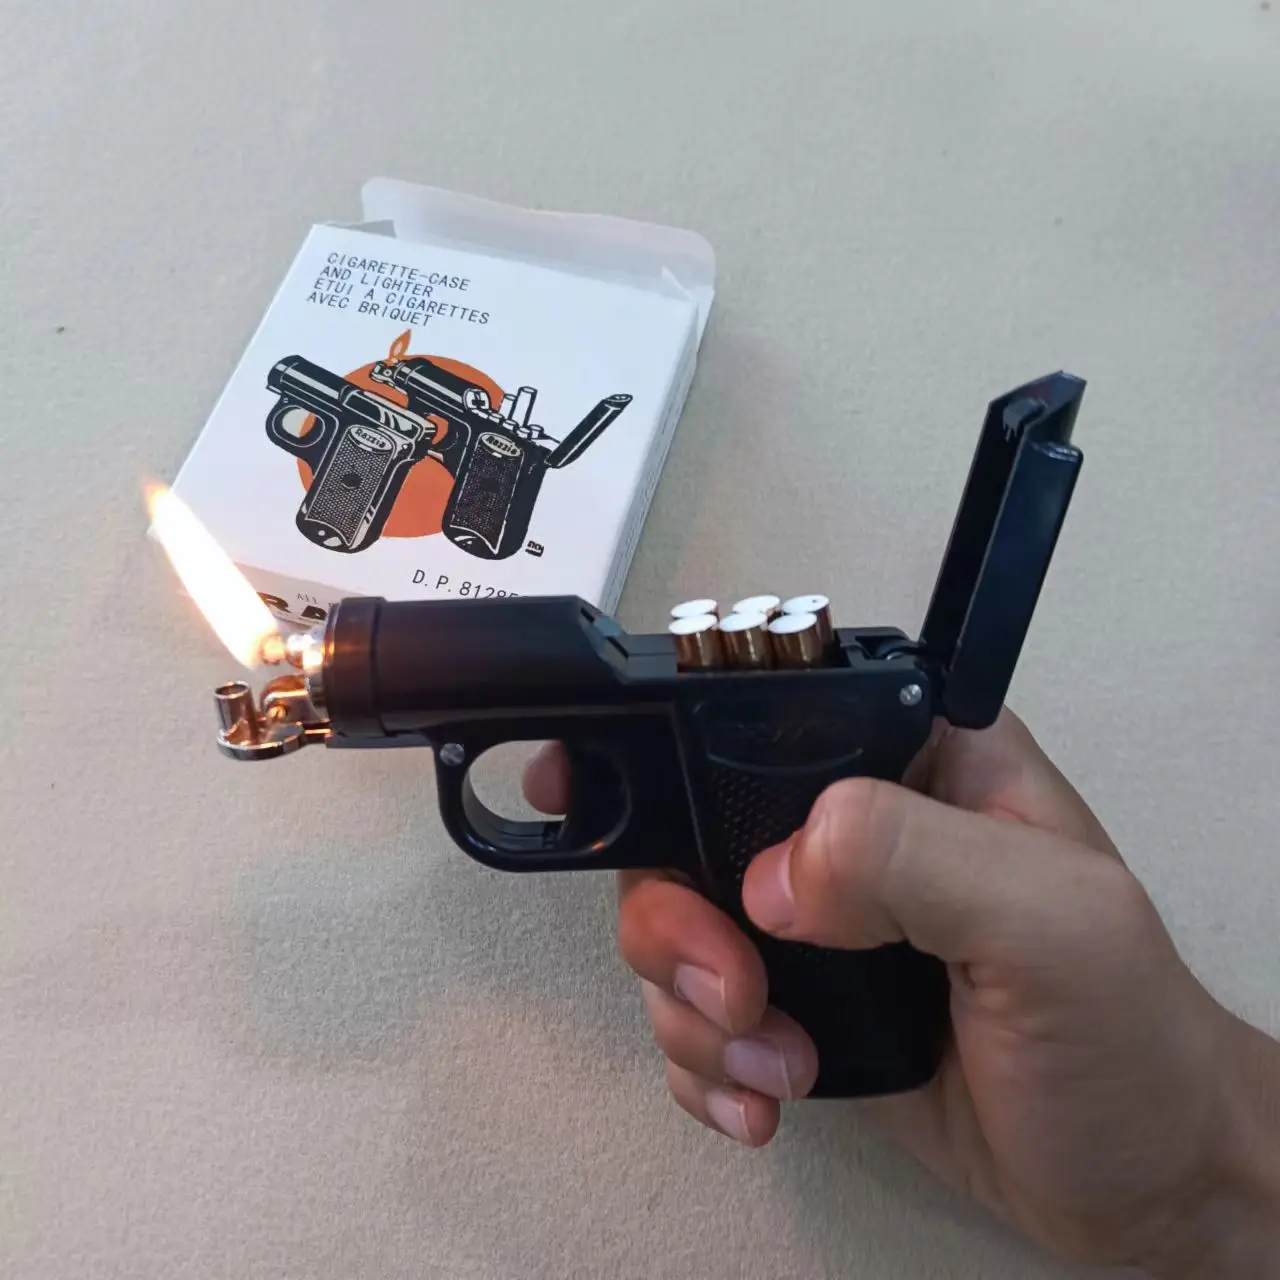 

New Retro Creative Kerosene Lighter Pistol-shaped Cigarette Case Dual-purpose Personality Lighters Fun Gadgets Gifts For Men